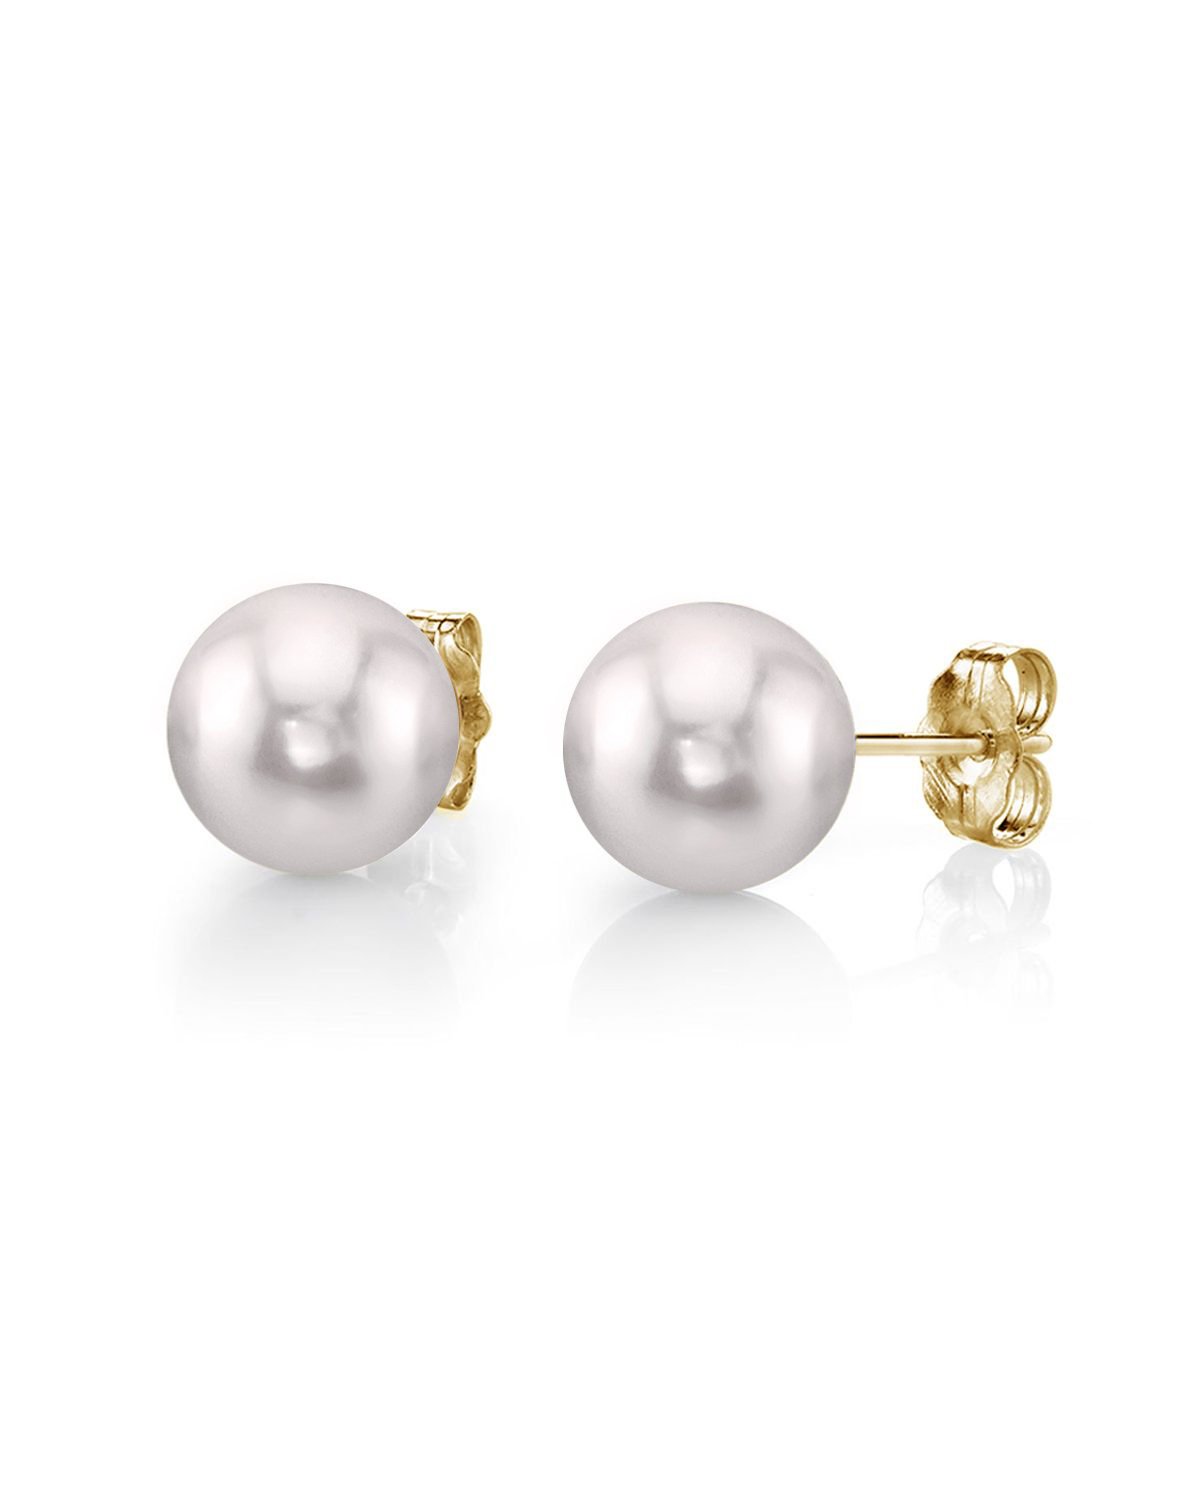 6.0-6.5 mm AAA White Akoya Pearl Stud Earrings 14K Yellow Gold by Pearl Paradise